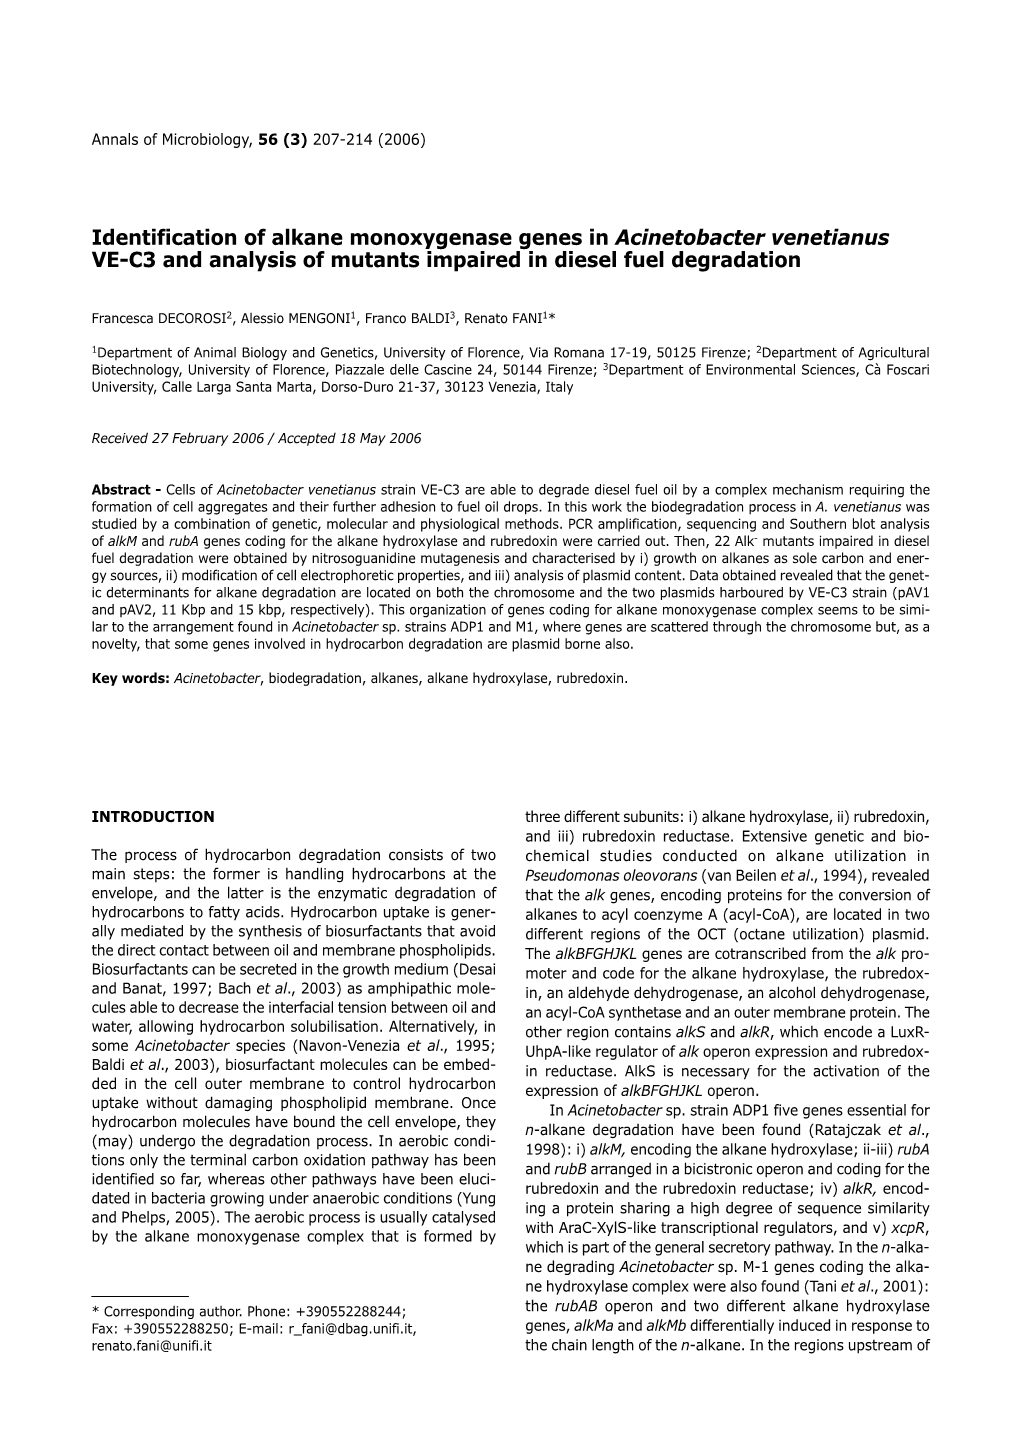 Identification of Alkane Monoxygenase Genes in Acinetobacter Venetianus VE-C3 and Analysis of Mutants Impaired in Diesel Fuel Degradation